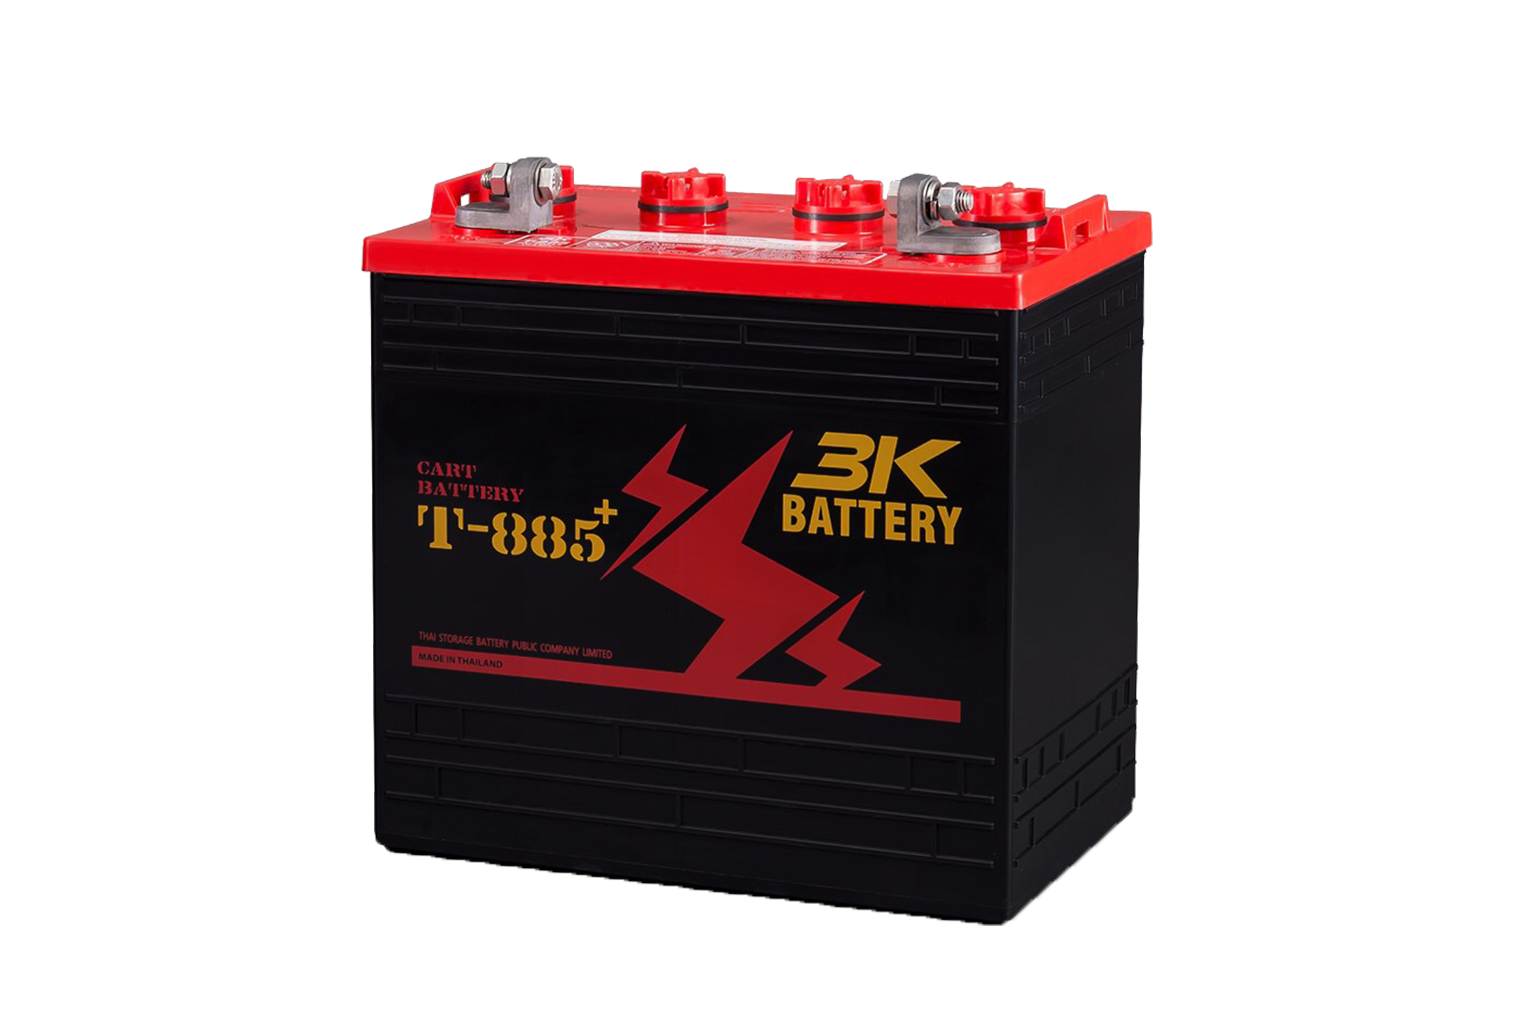 Battery Deep Cycle 3K T-885 8V 170Ah